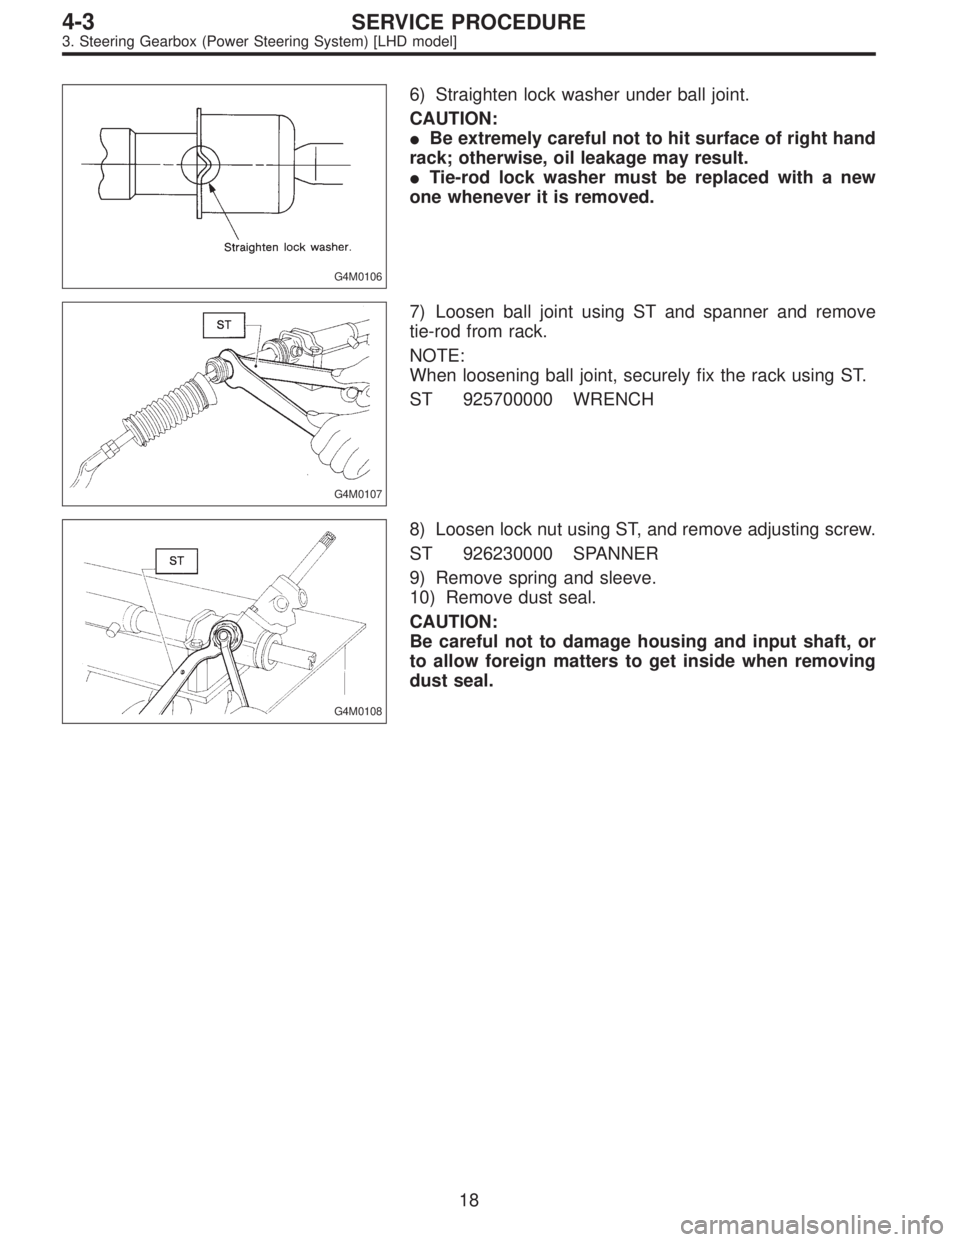 SUBARU LEGACY 1995  Service Repair Manual G4M0106
6) Straighten lock washer under ball joint.
CAUTION:
Be extremely careful not to hit surface of right hand
rack; otherwise, oil leakage may result.
Tie-rod lock washer must be replaced with 